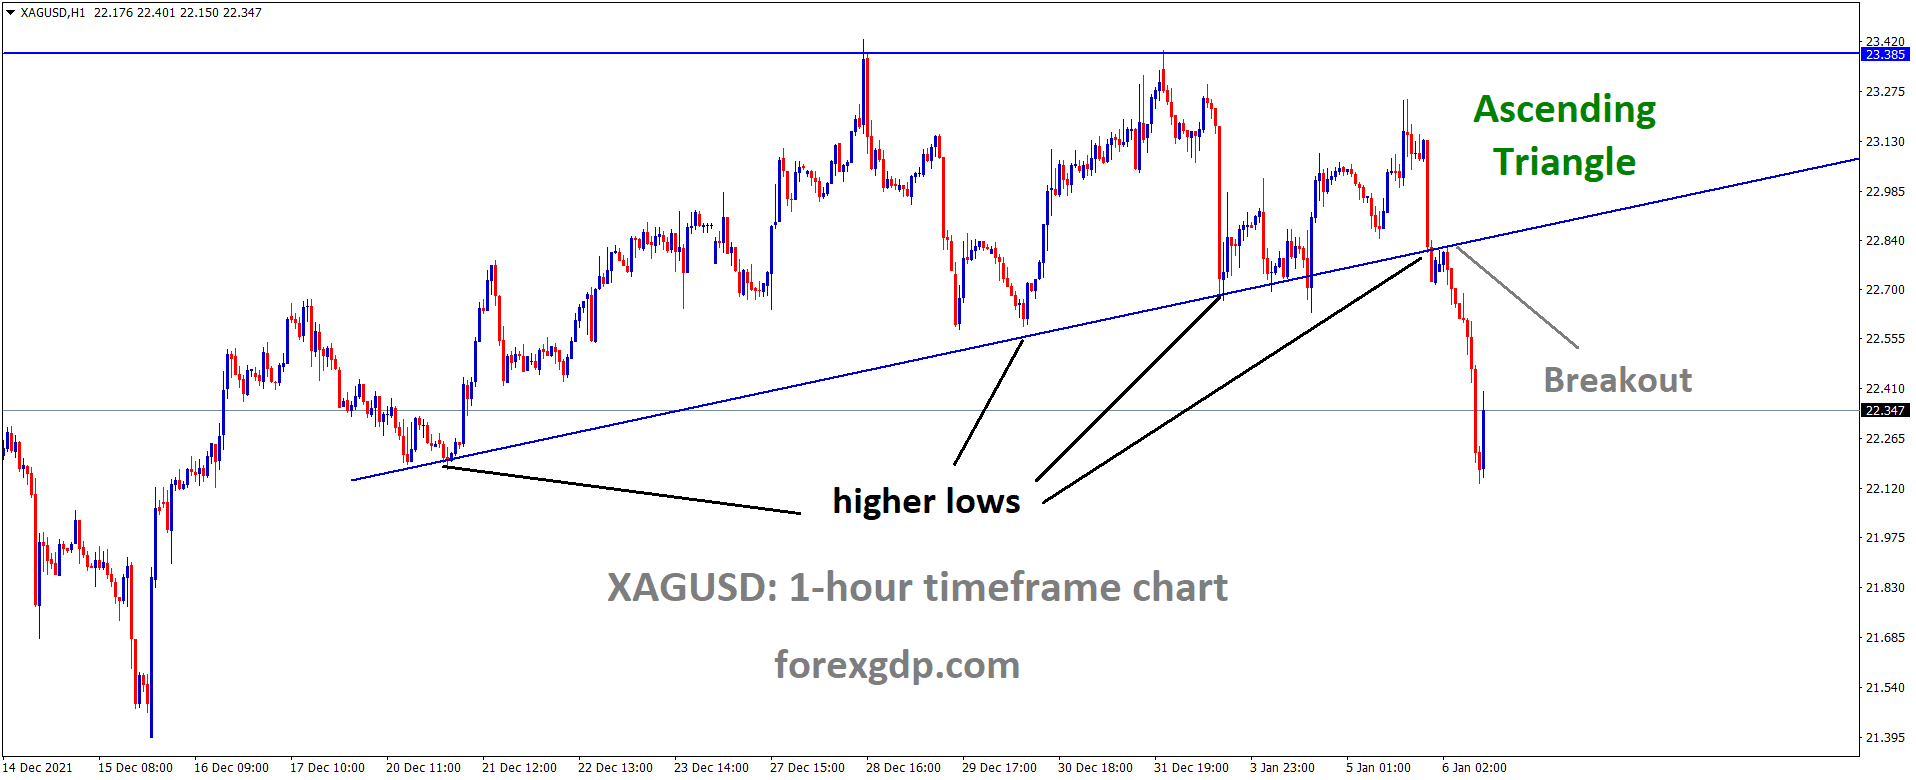 XAGUSD Silver price has broken the ascending triangle pattern.